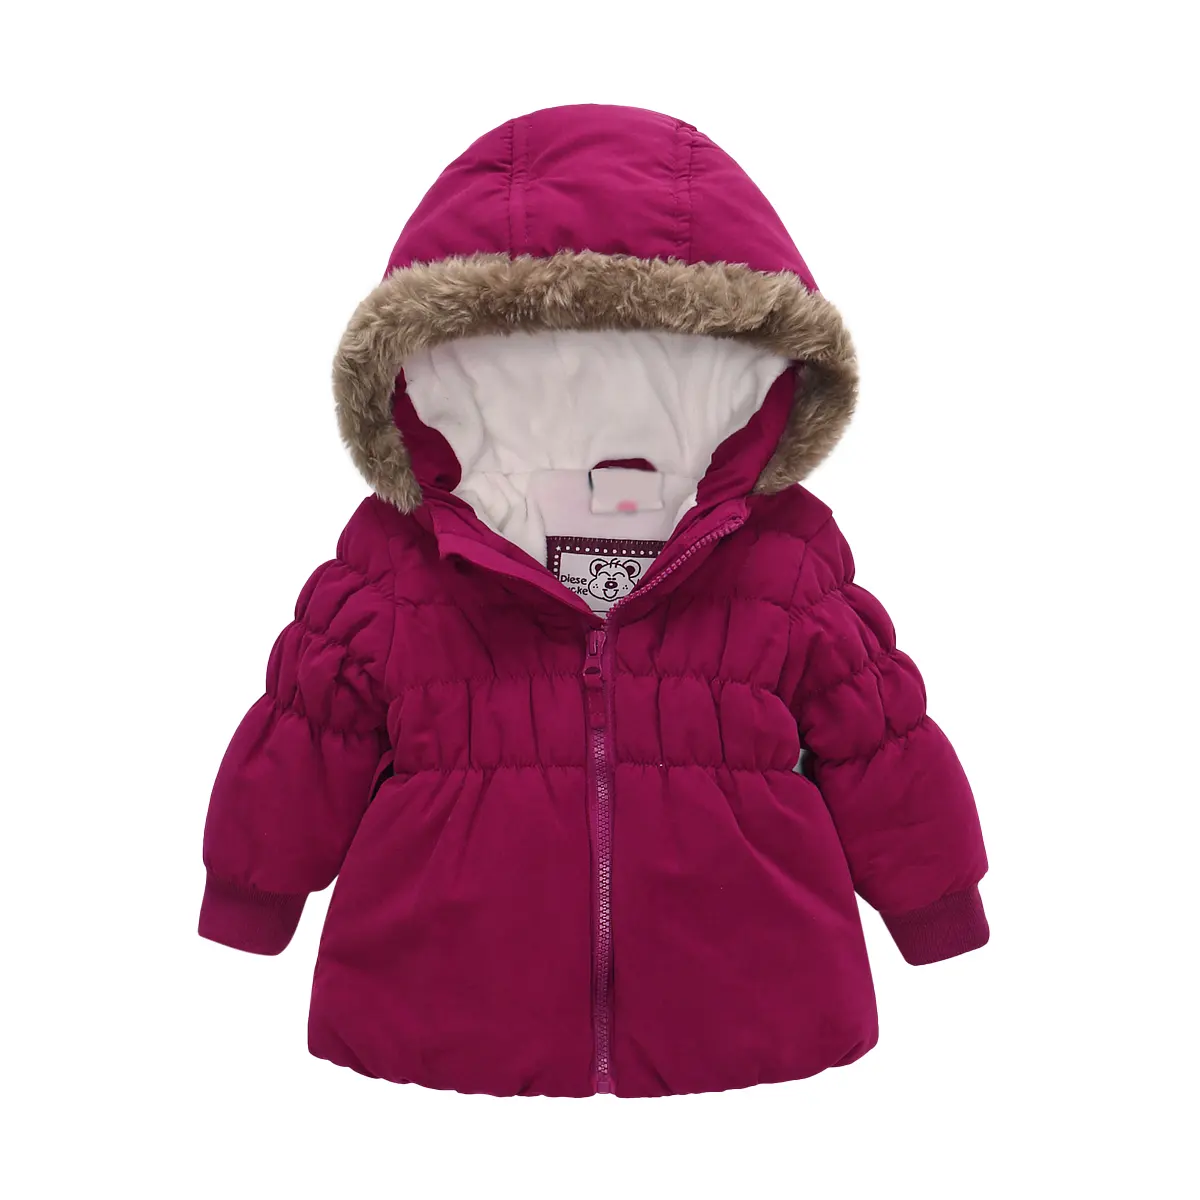 OEM Customization toddler girls fashion clothing winter warm coat red hooded down jackets baby girls adorable padding coat